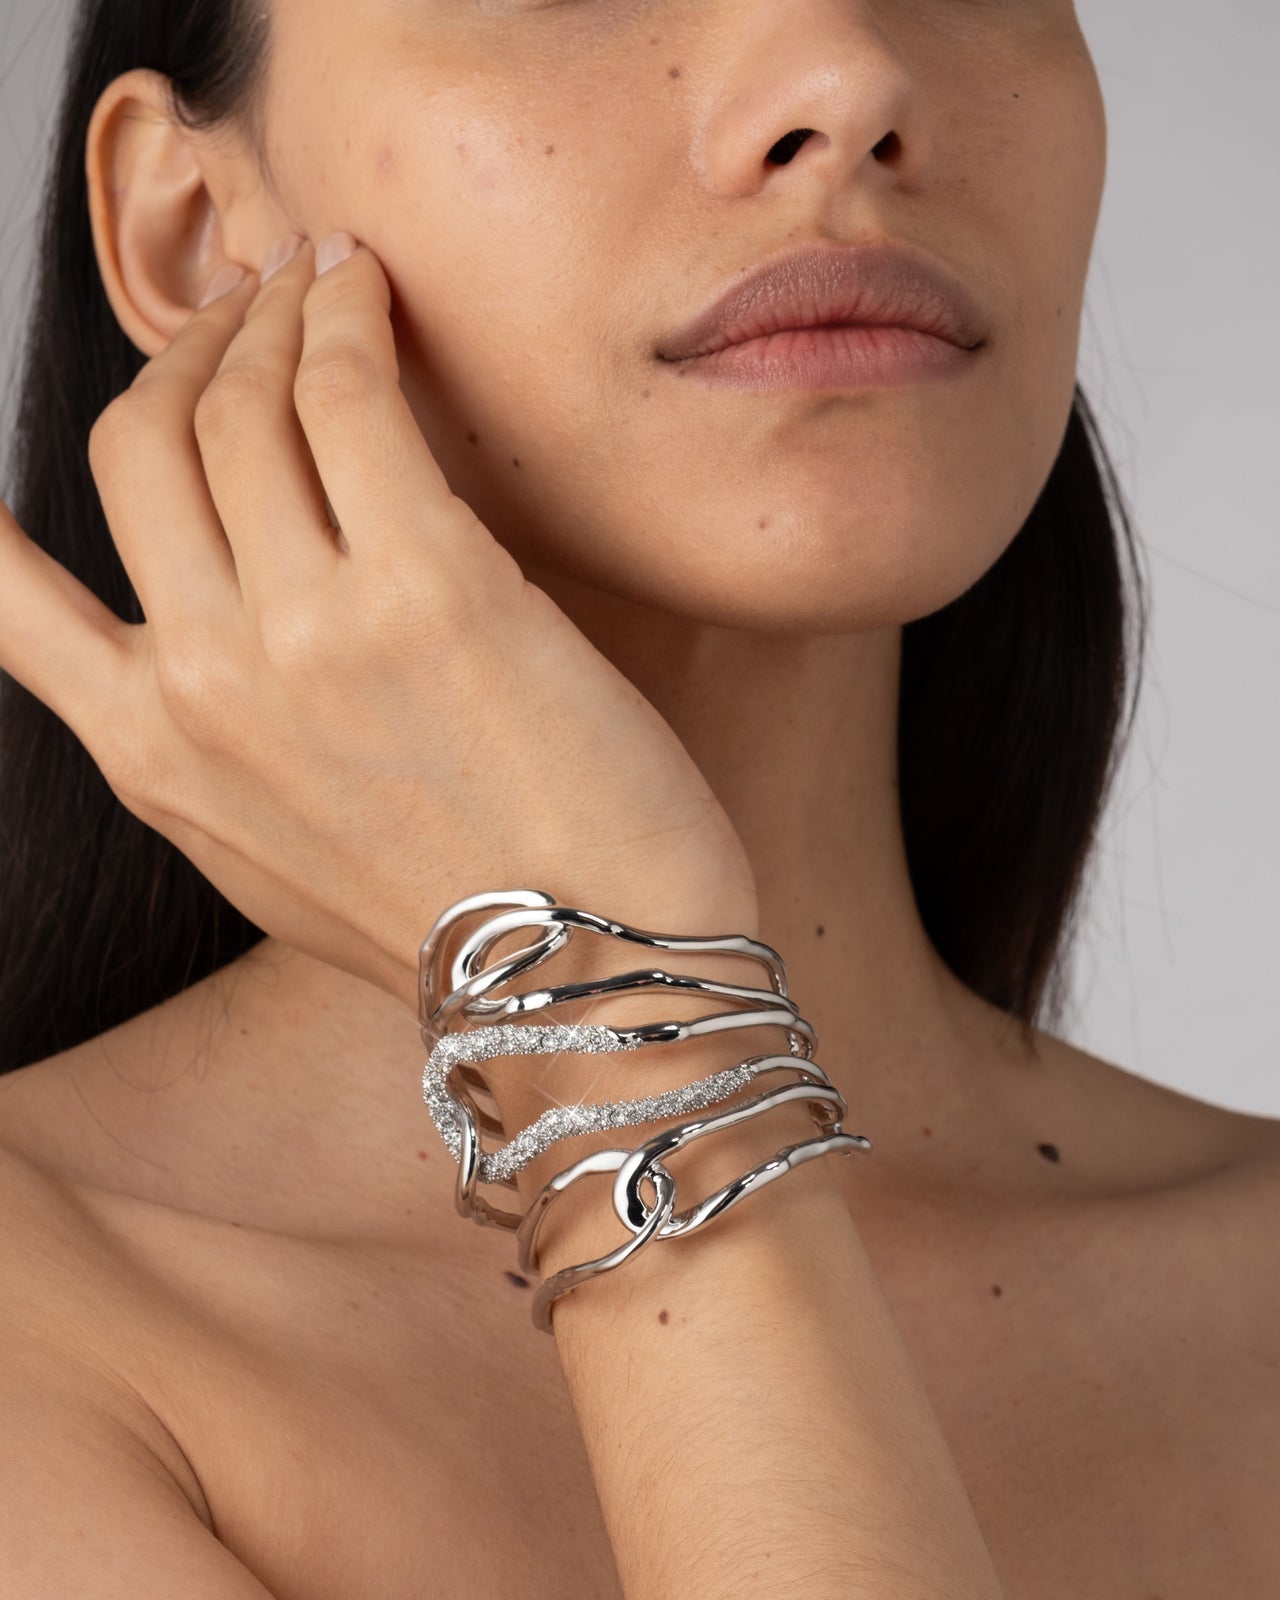 Solanales Silver Crystal Interlocked Cuff Bracelet